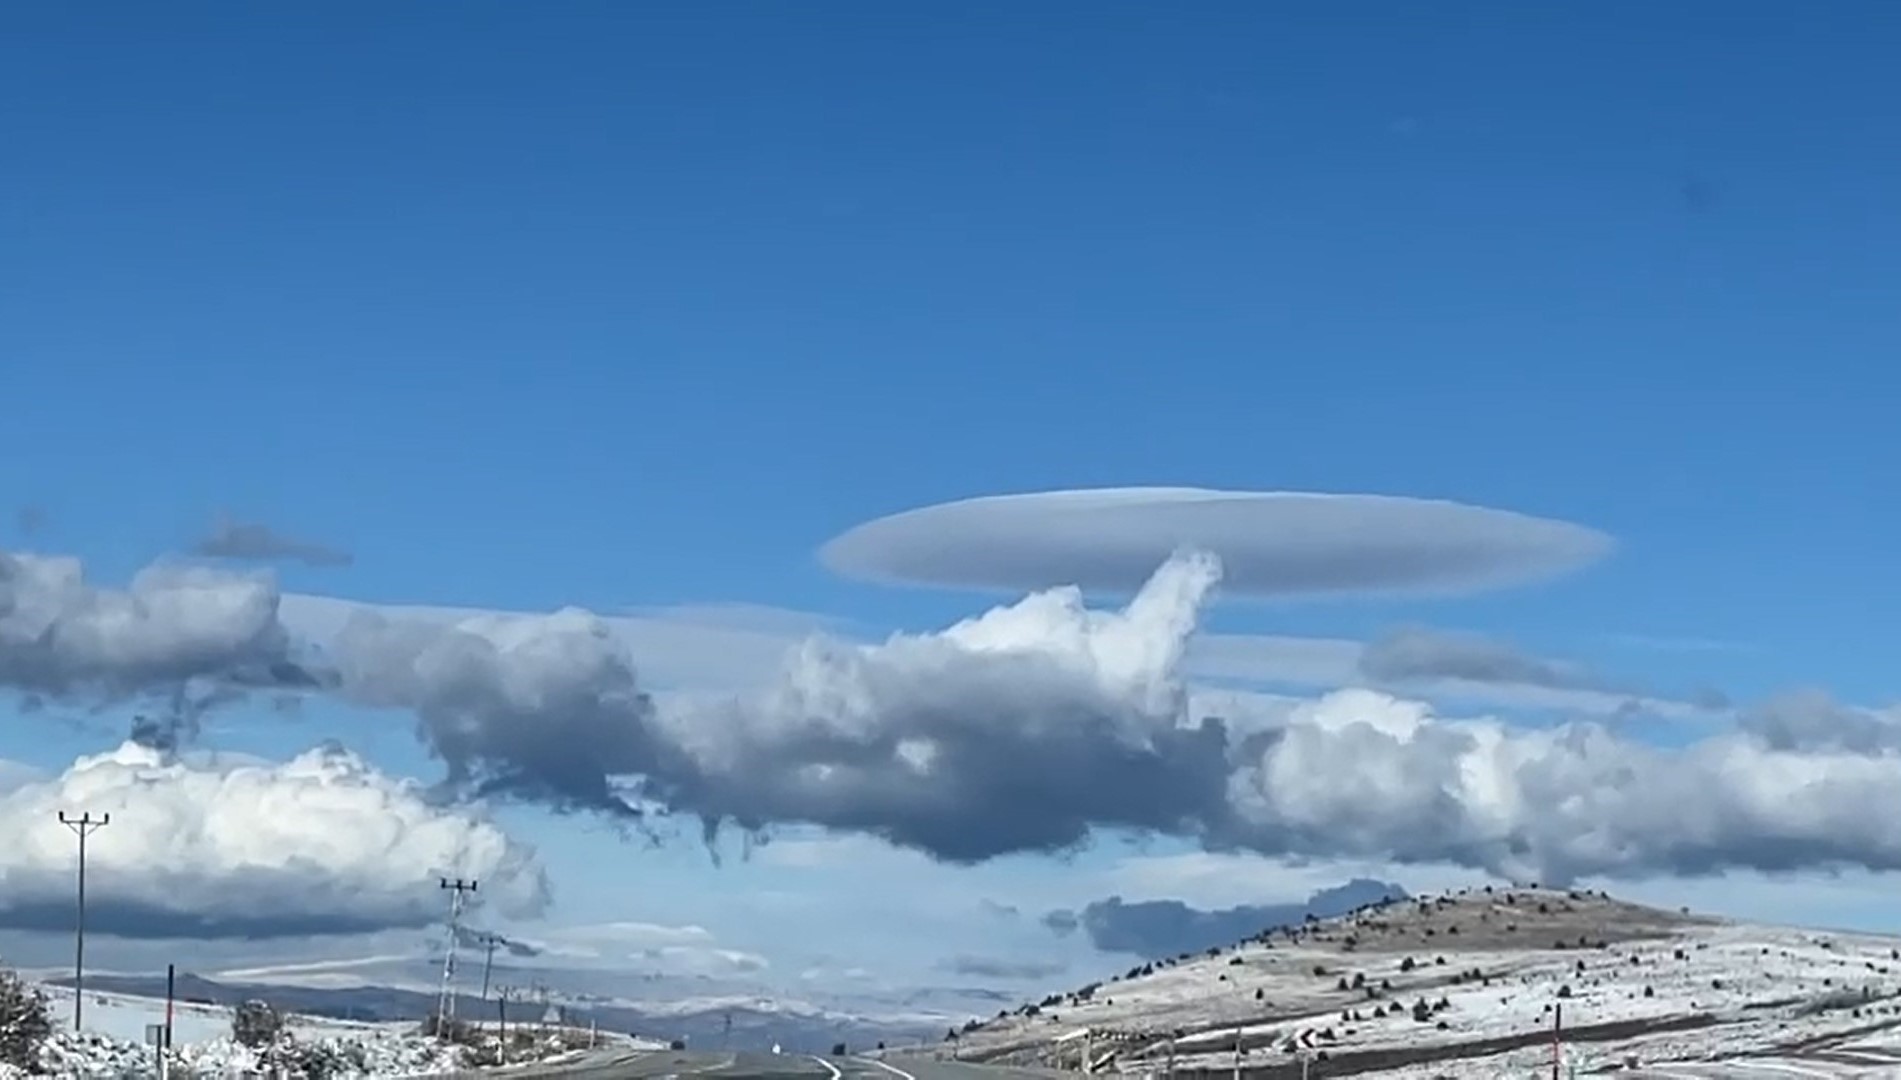 Spectacular lenticular cloud formation wows observers in Tatvan, Turkiye